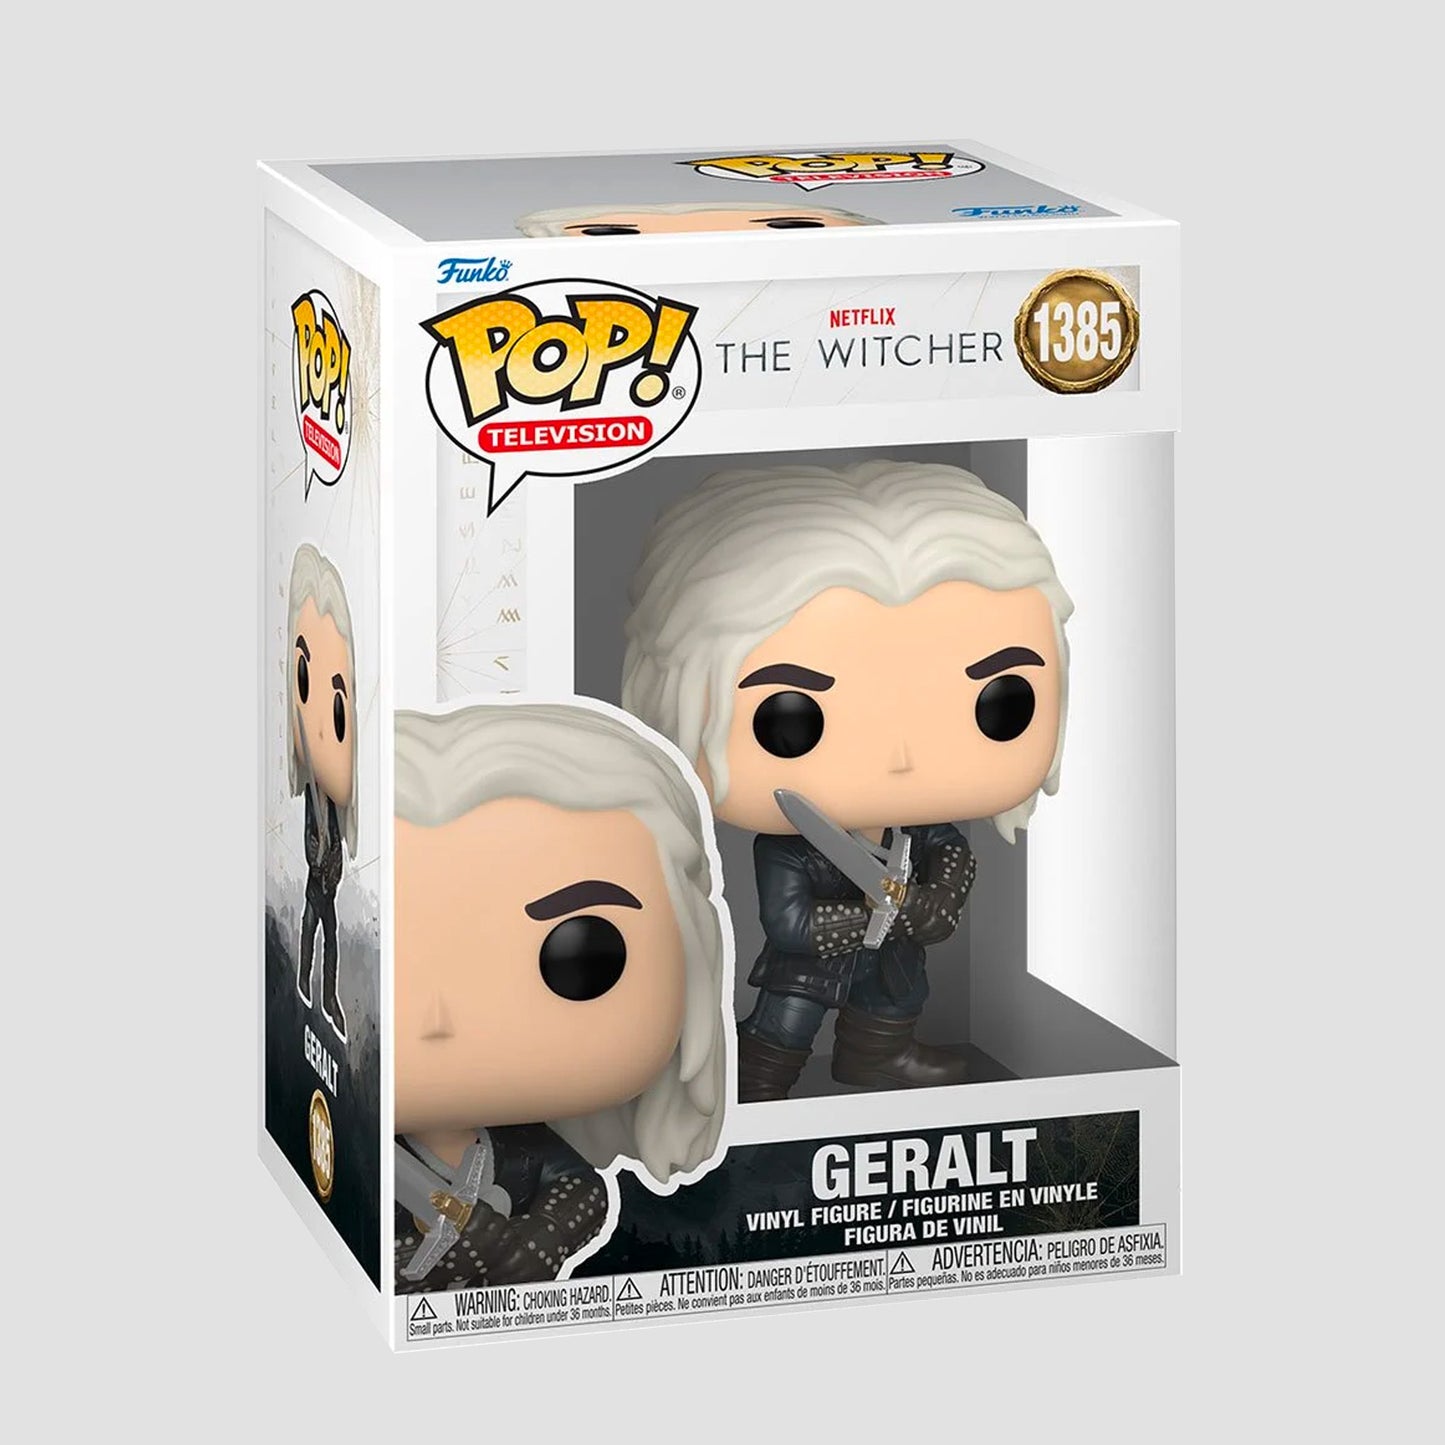 Geralt (Sword) The Witcher Season 3 Funko Pop!